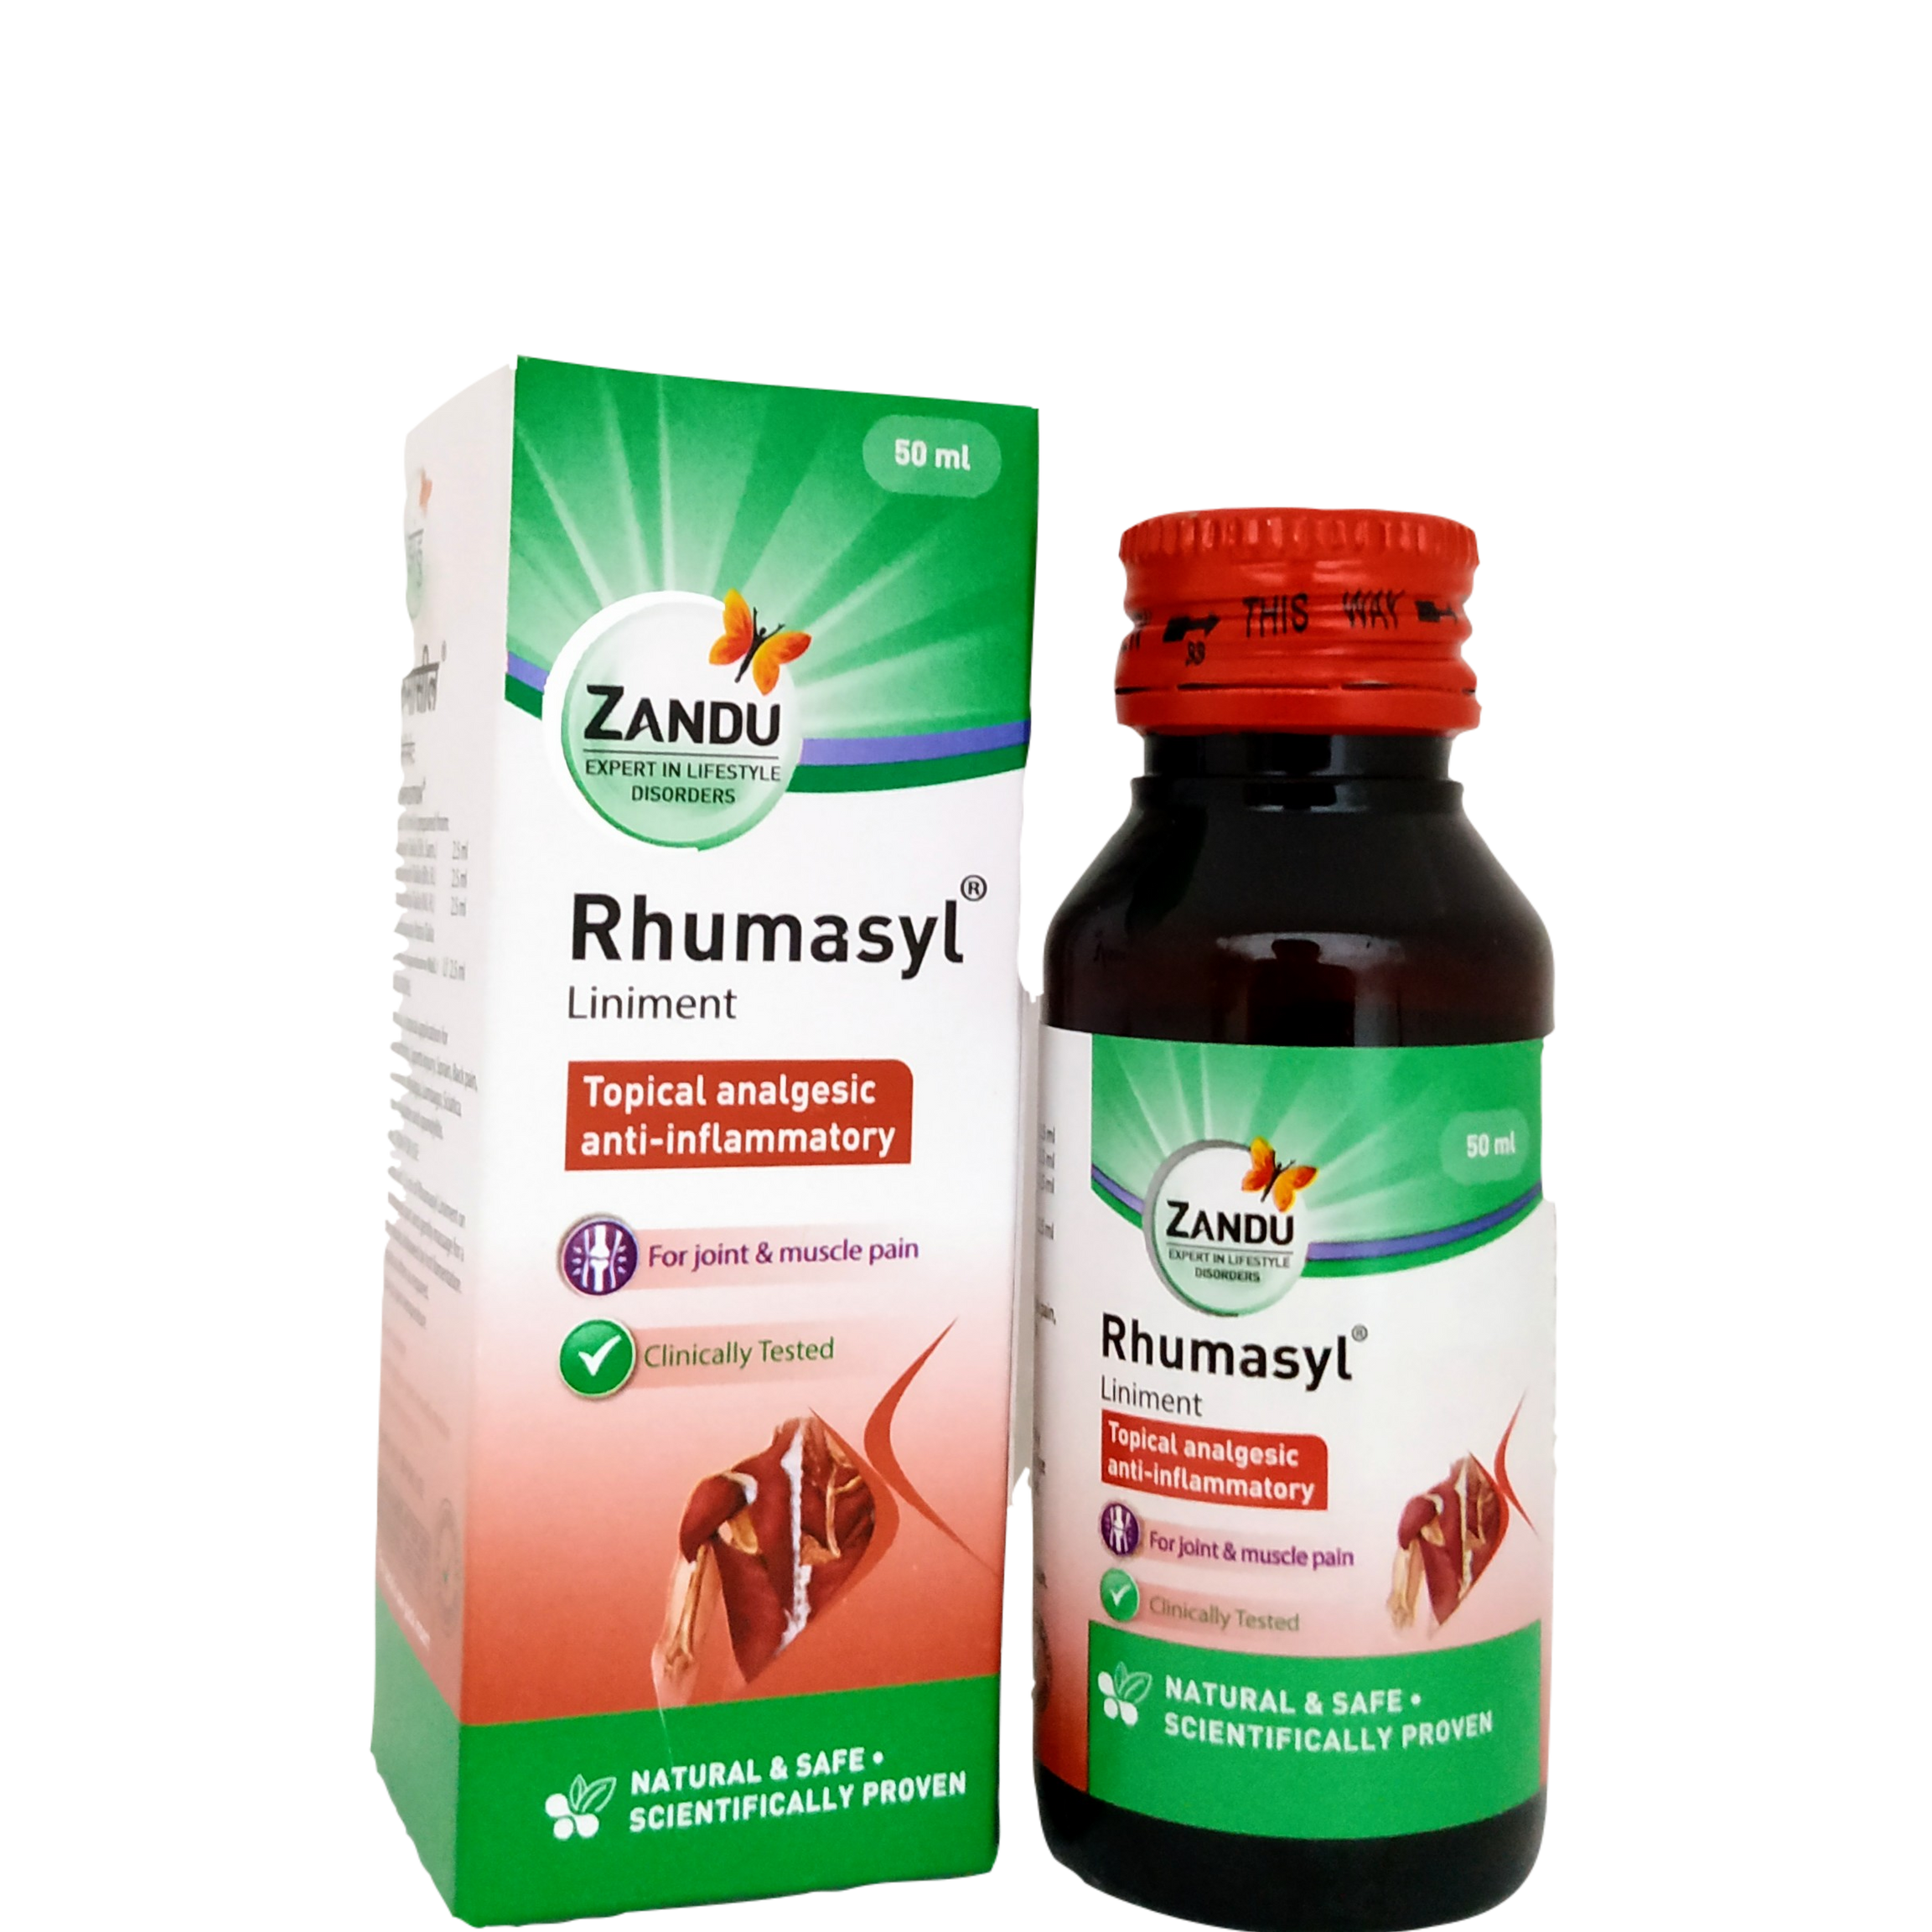 Shop Rhumasyl liniment oil 50ml at price 125.00 from Zandu Online - Ayush Care